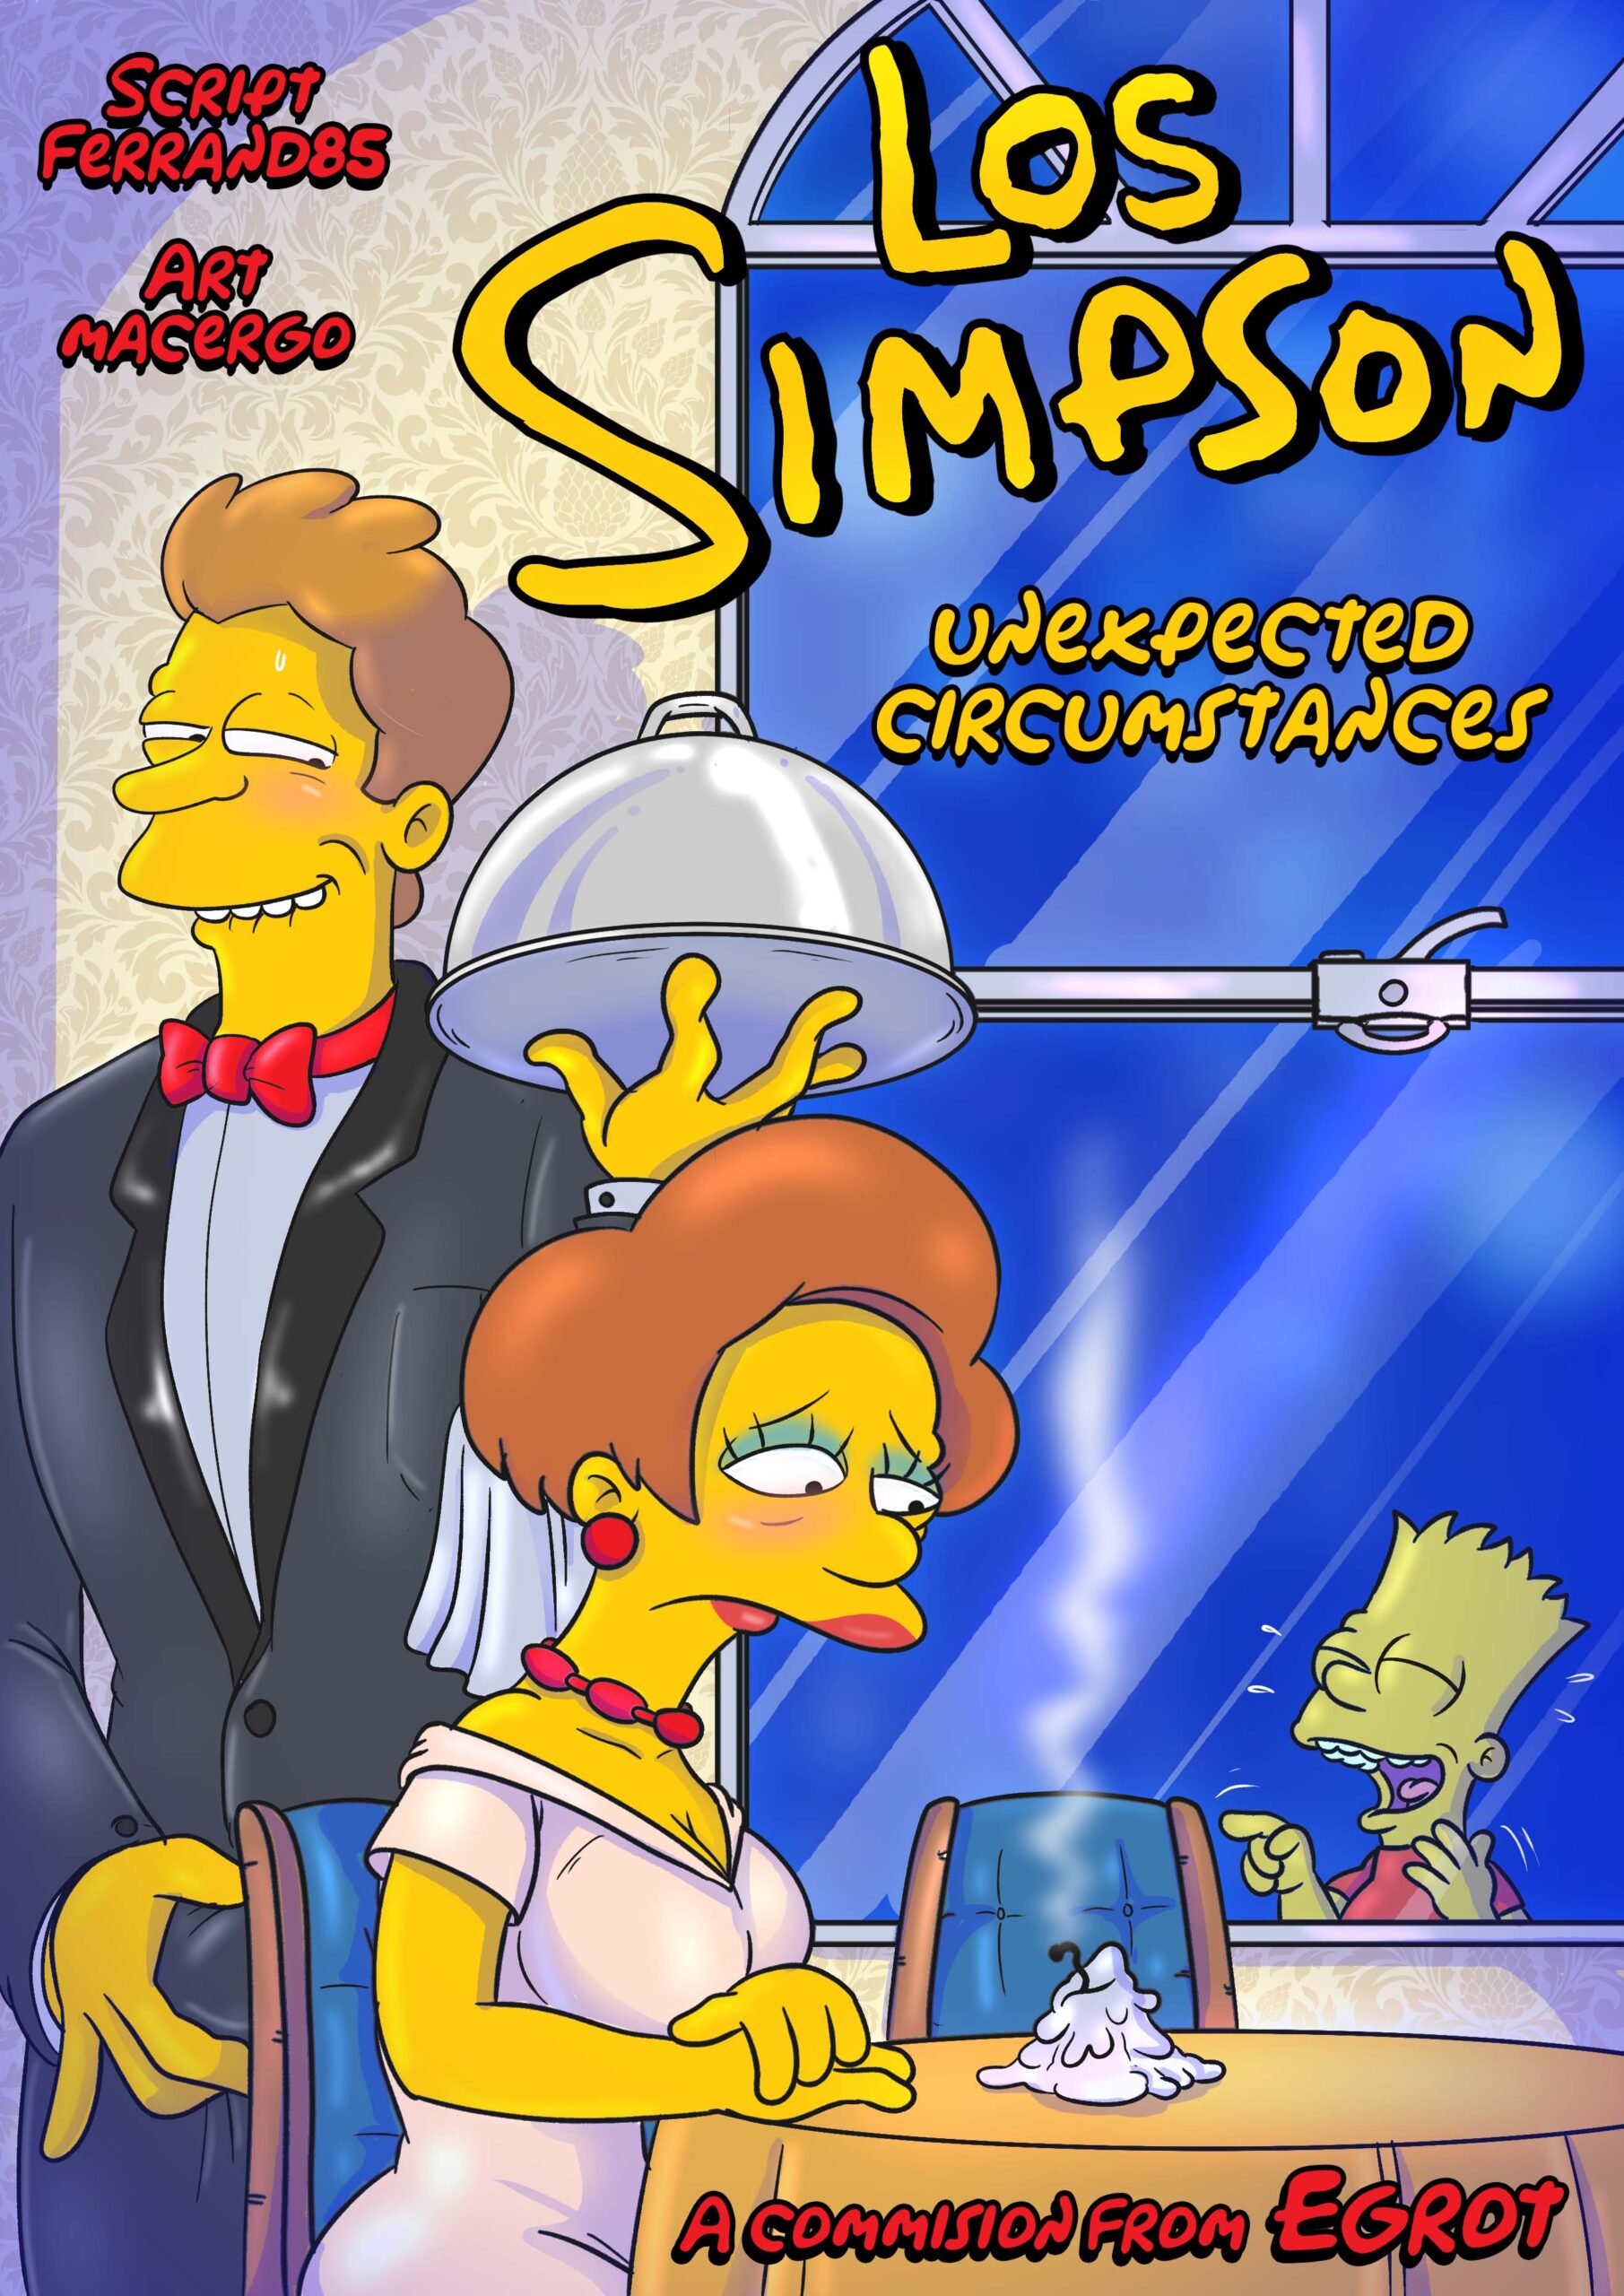 Simpsons Bondage Lactation - Macergo - Unexpected Circumstances [the simpsons] â€¢ Free Porn Comics